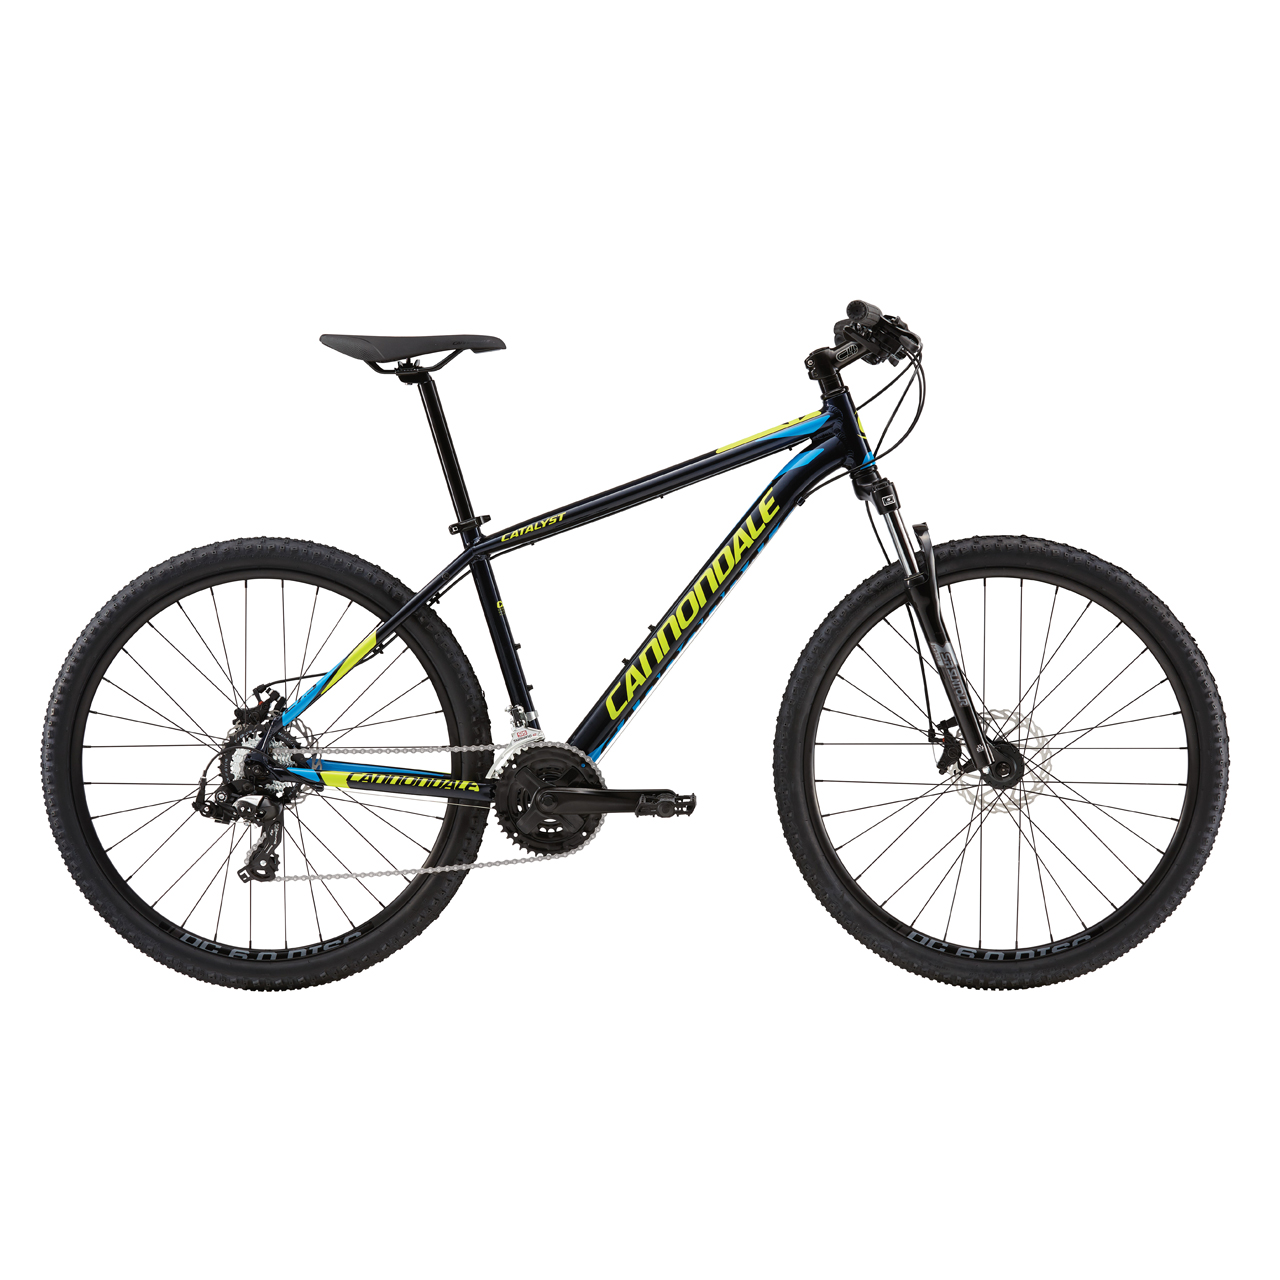 دوچرخه کوهستان کنندال Catalyst 4 سایز 27.5 رنگ مشکی/آبی/زرد 2017